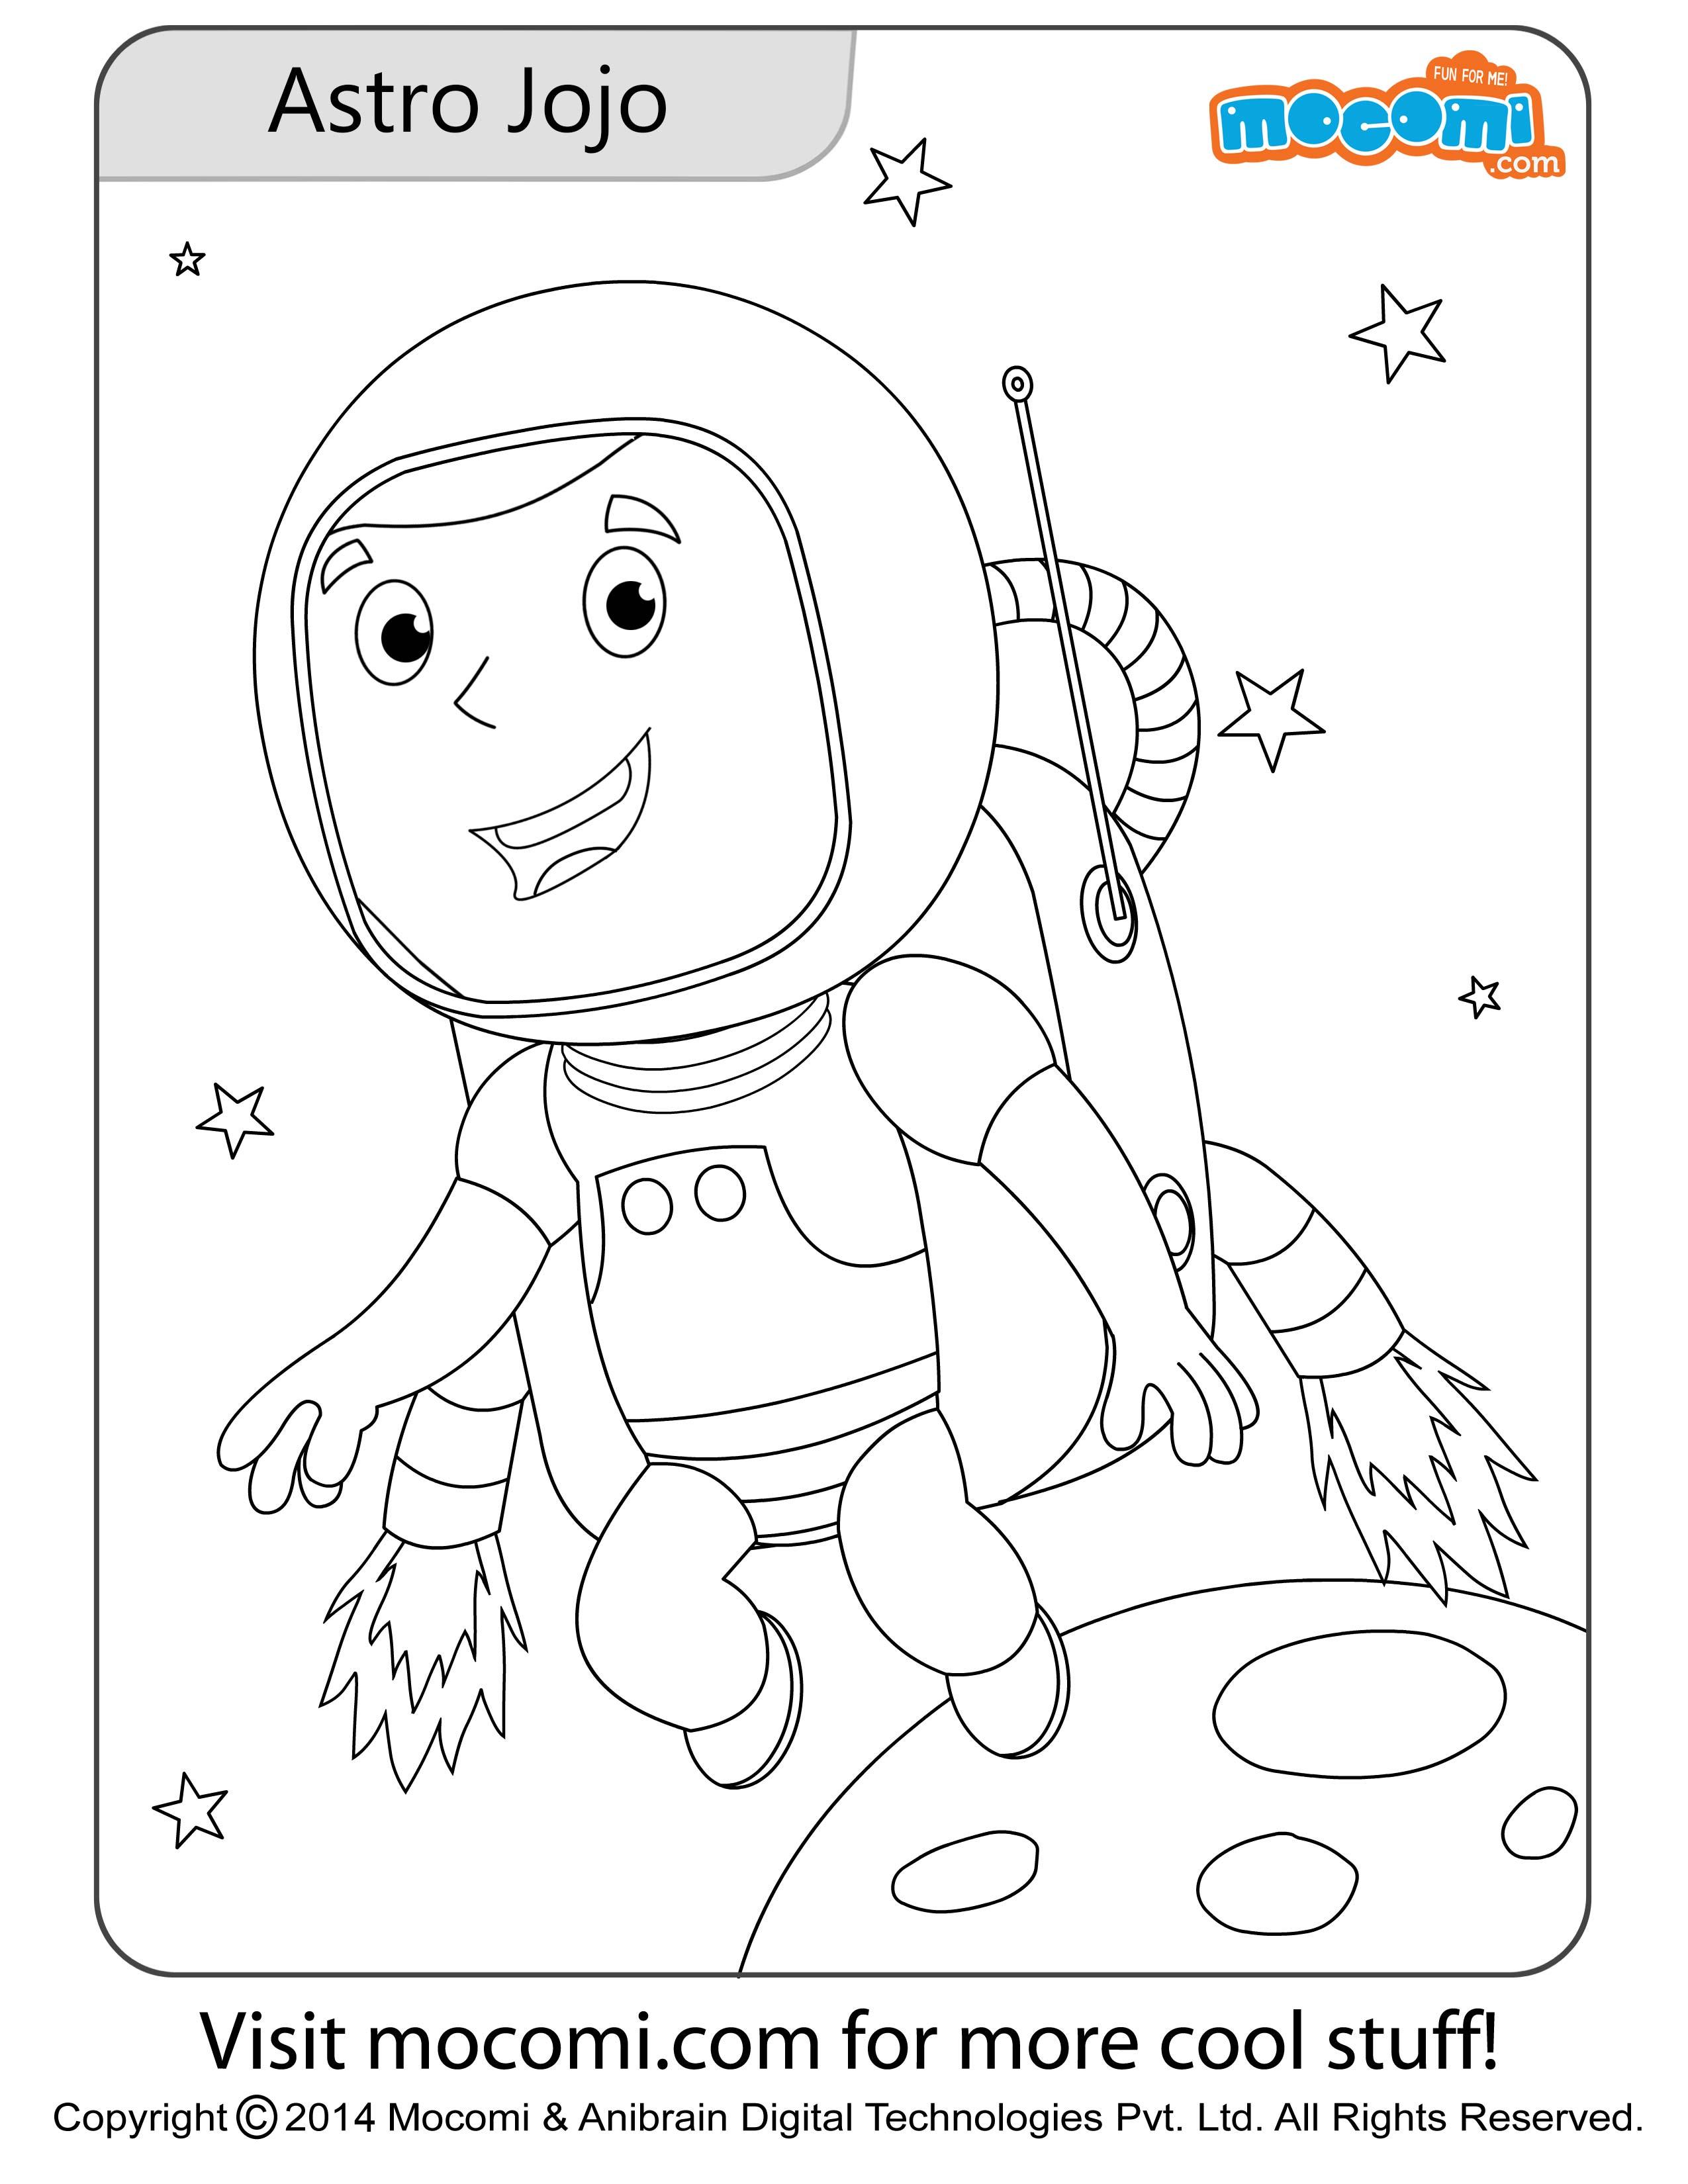 Astronaut Jojo – Colouring Page